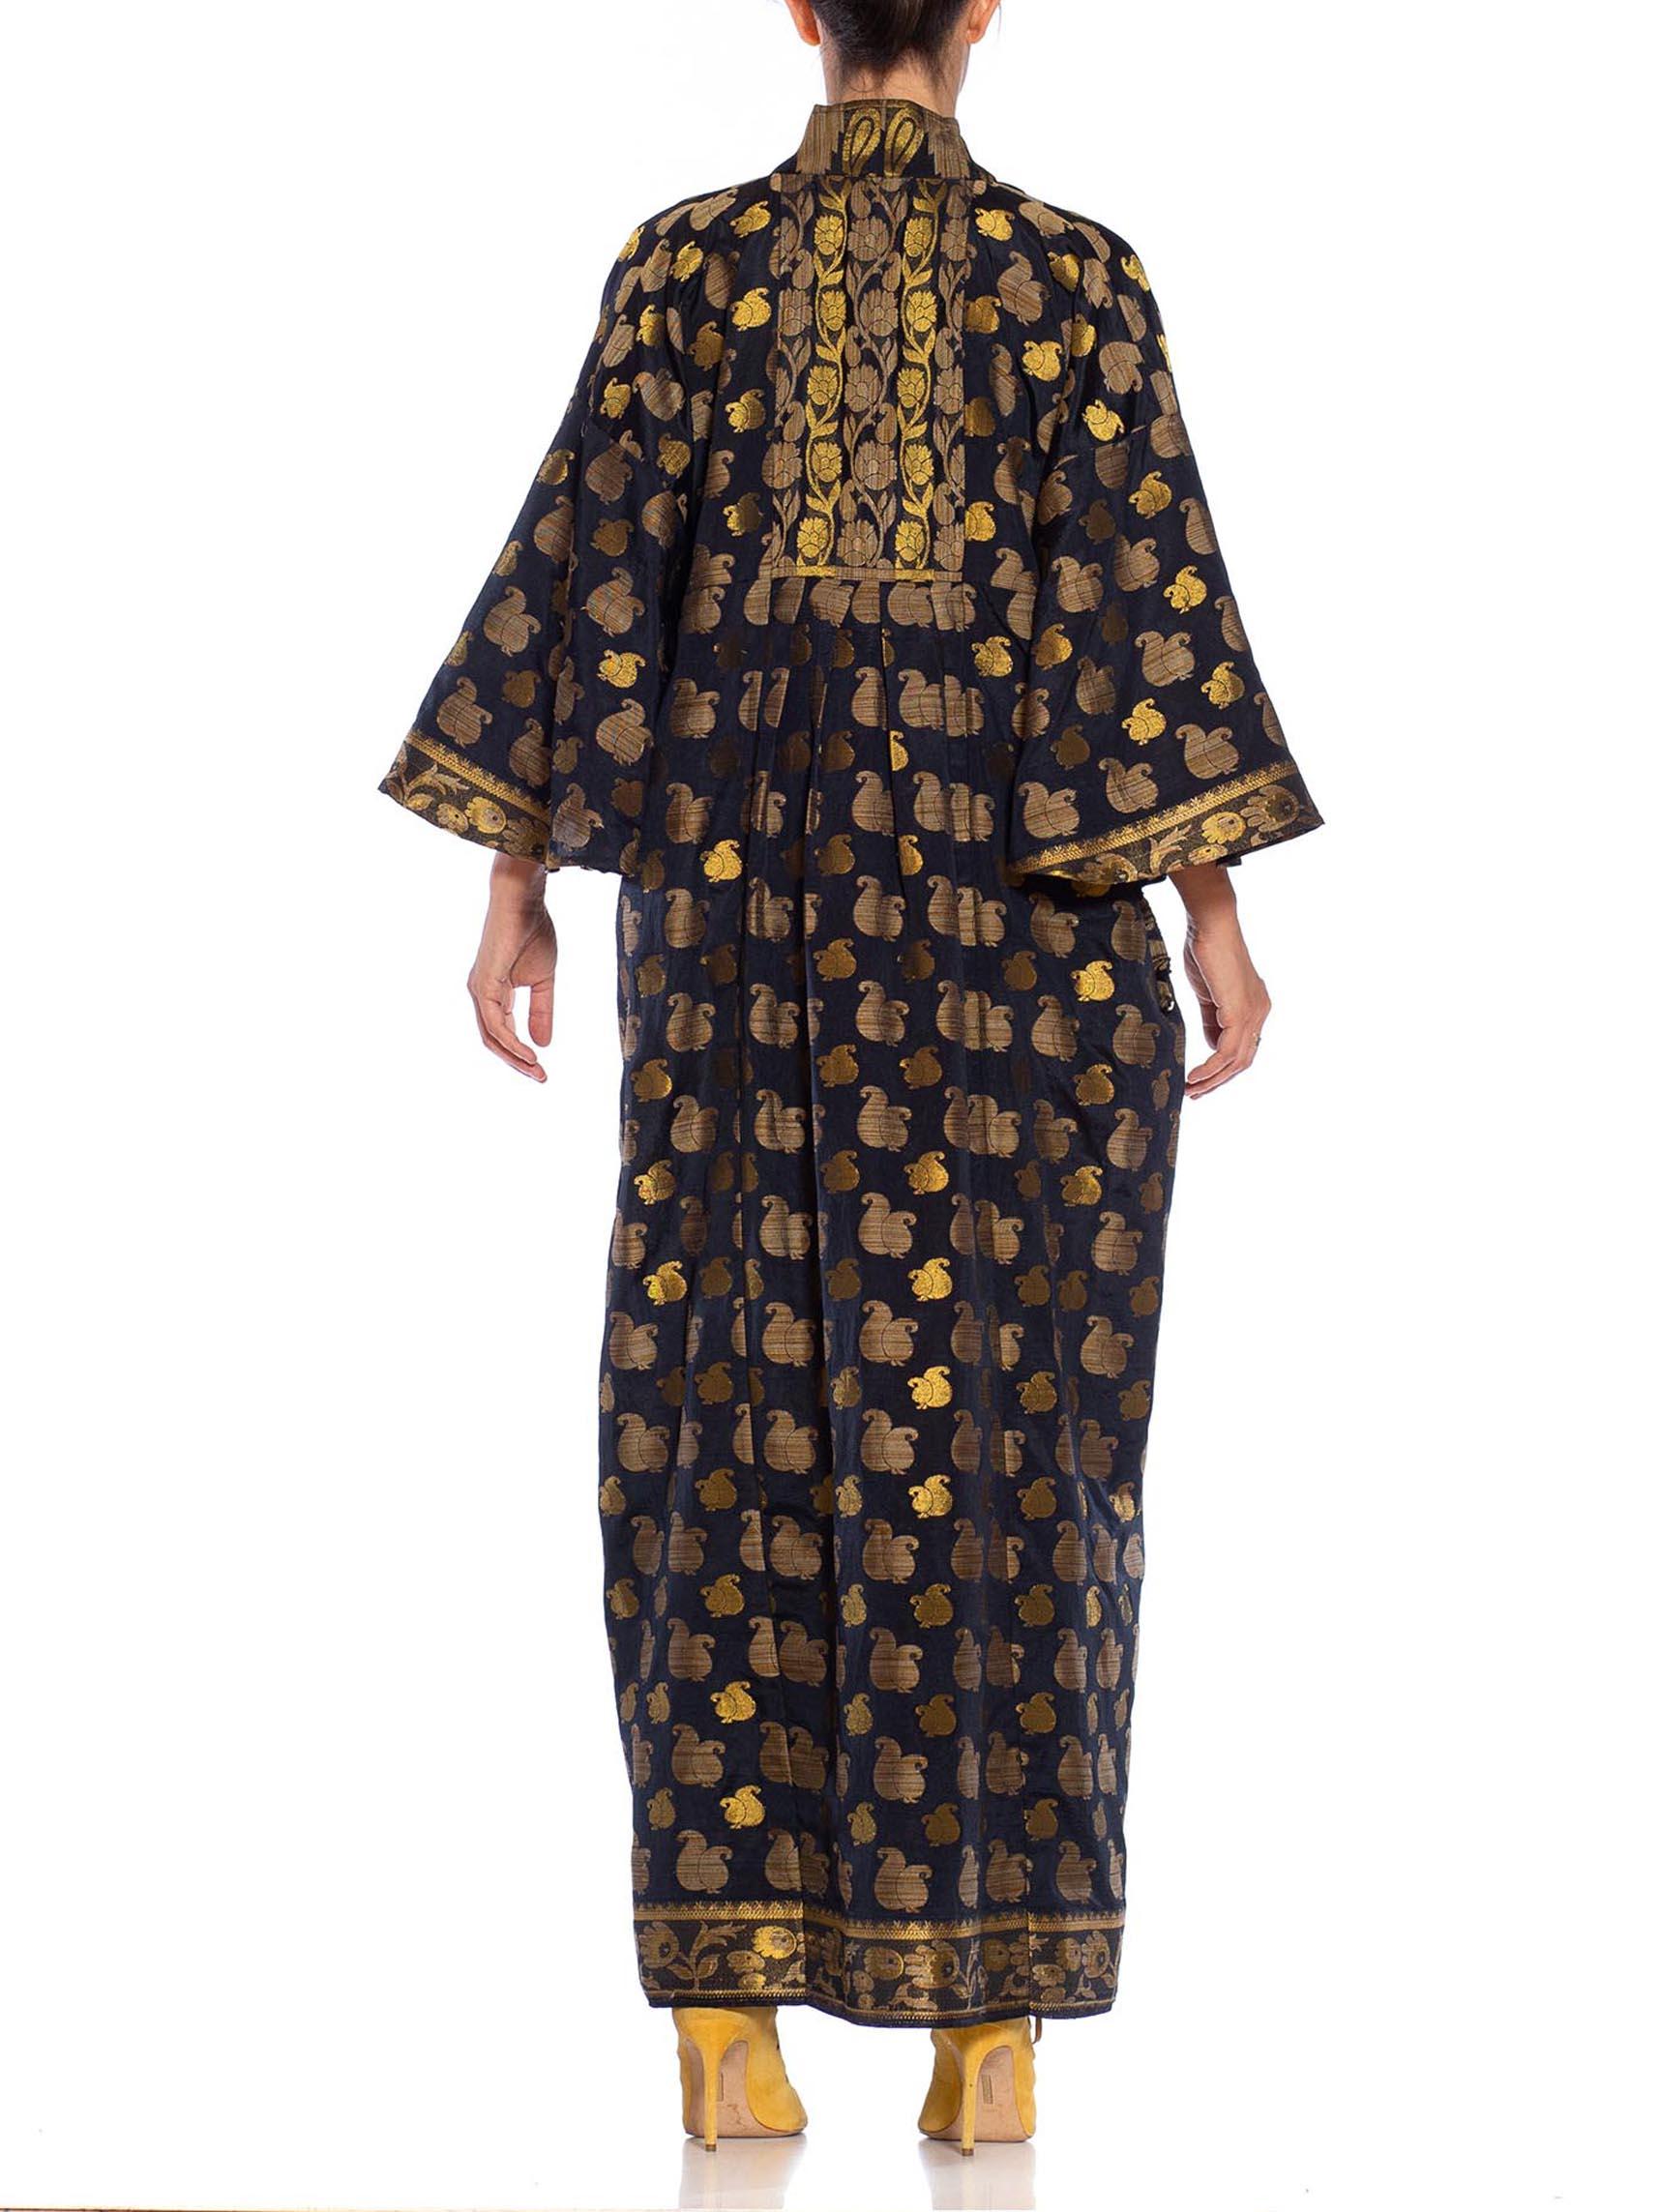 MORPHEW COLLECTION Black & Gold Metallic Silk Kaftan Made From Vintage Saris For Sale 4